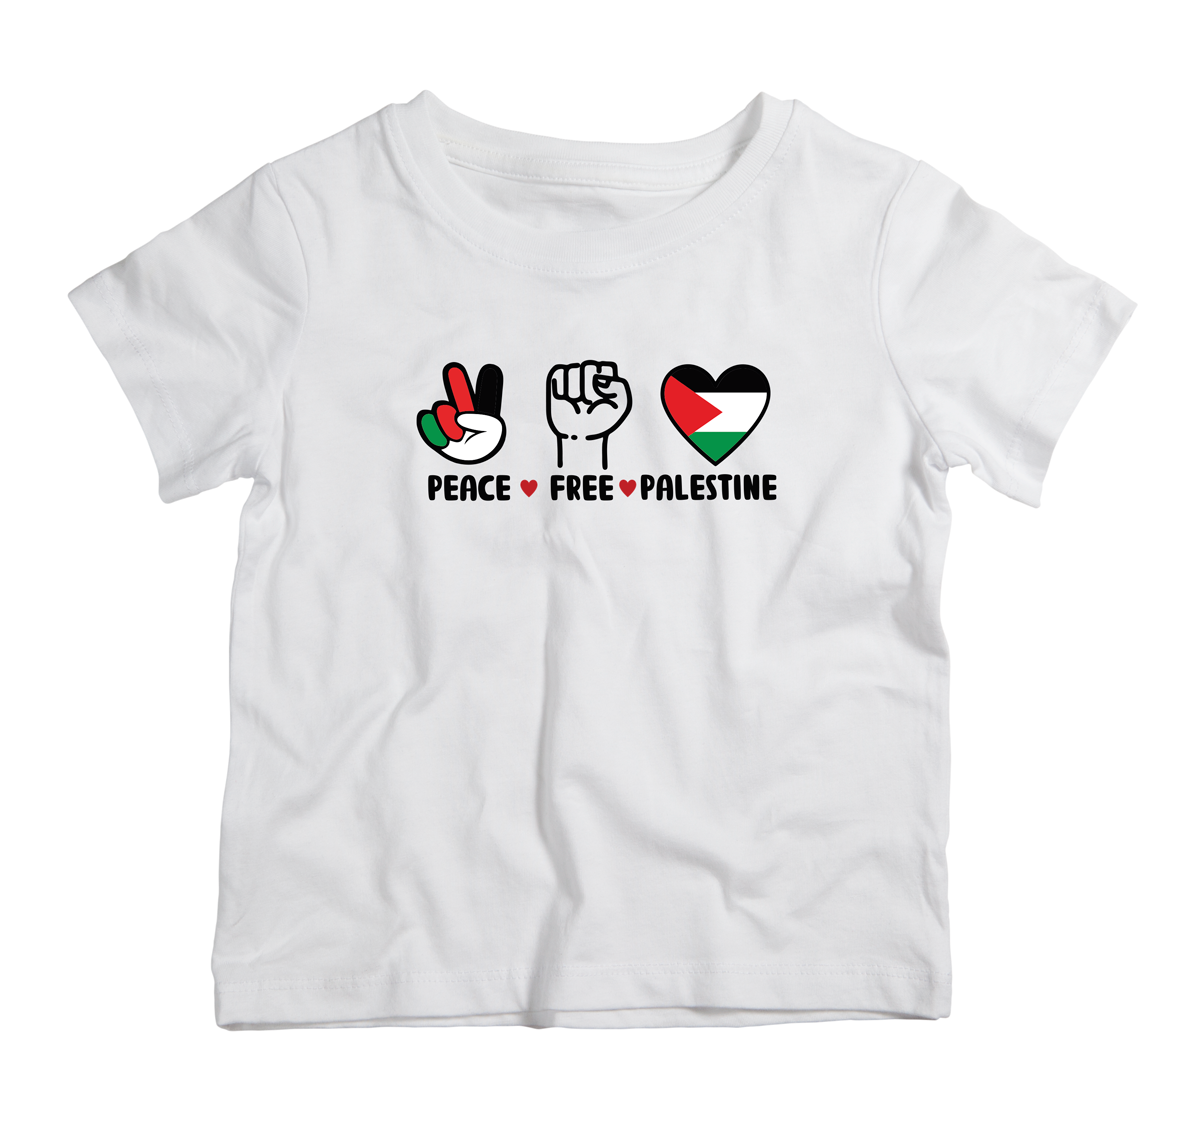 Palestinian Pride T-Shirt: Stylish and meaningful design celebrating heritage.